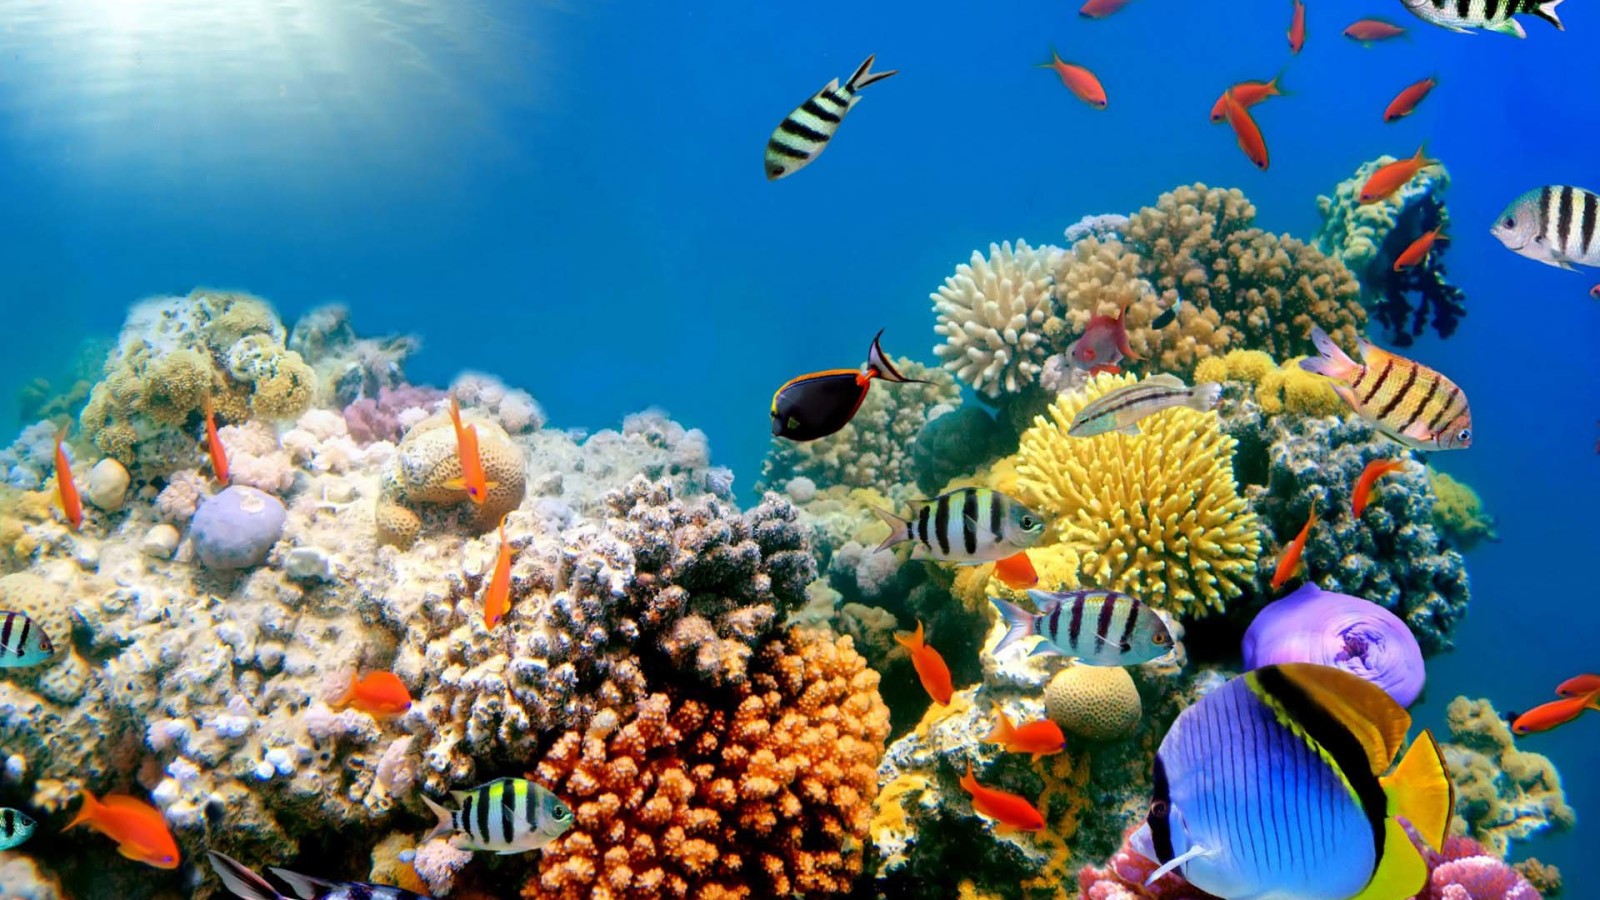 Coral Reef Wallpaper, 40 Beautiful Coral Reef Wallpapers - Hurghada Red Sea Egypt - HD Wallpaper 